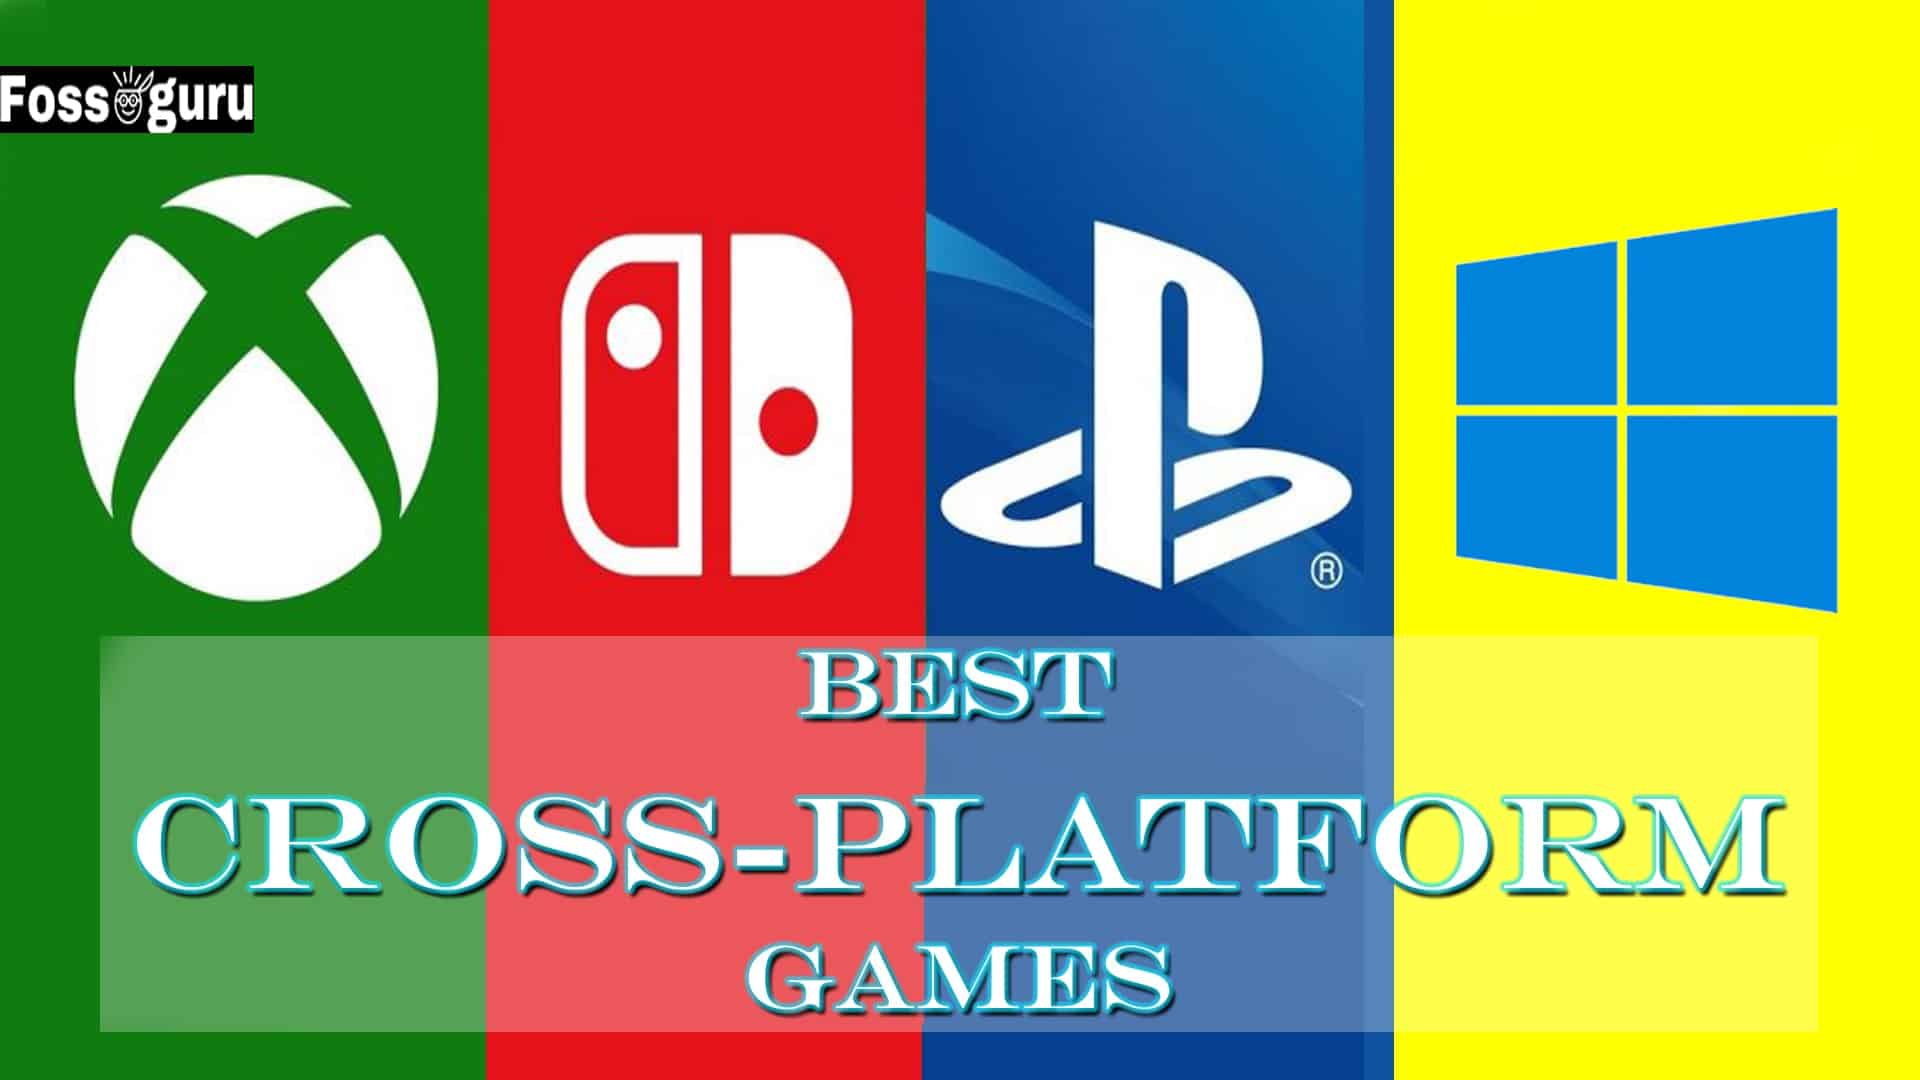 The Best Cross-Platform Games Of 2021